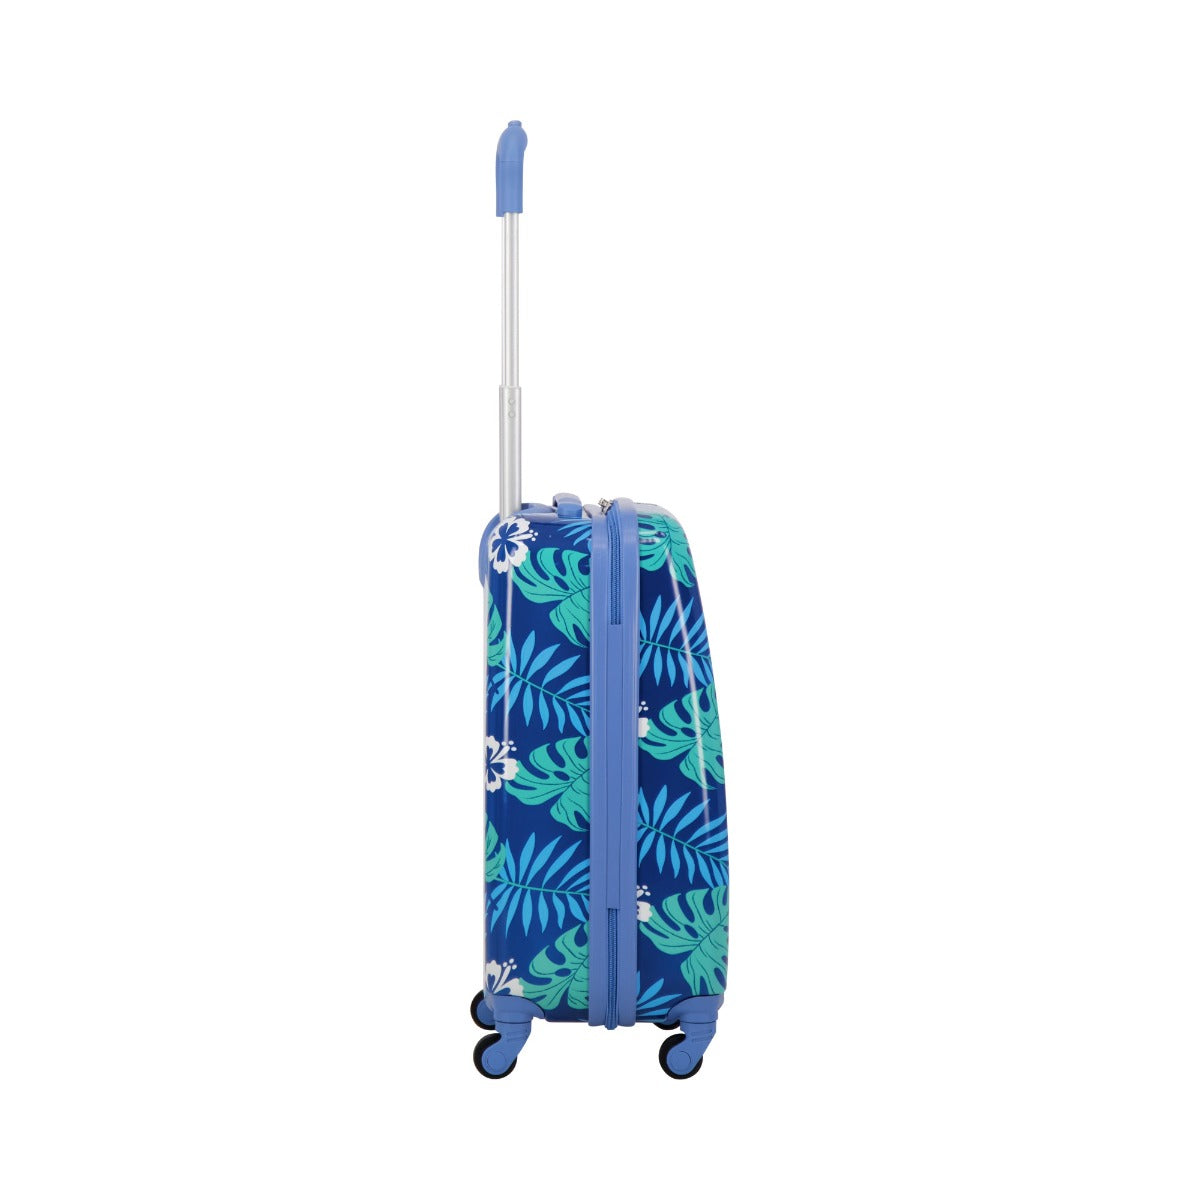 Blue Disney Ful Stitch tropical leaves - 21" hardside spinner suitcase for kids